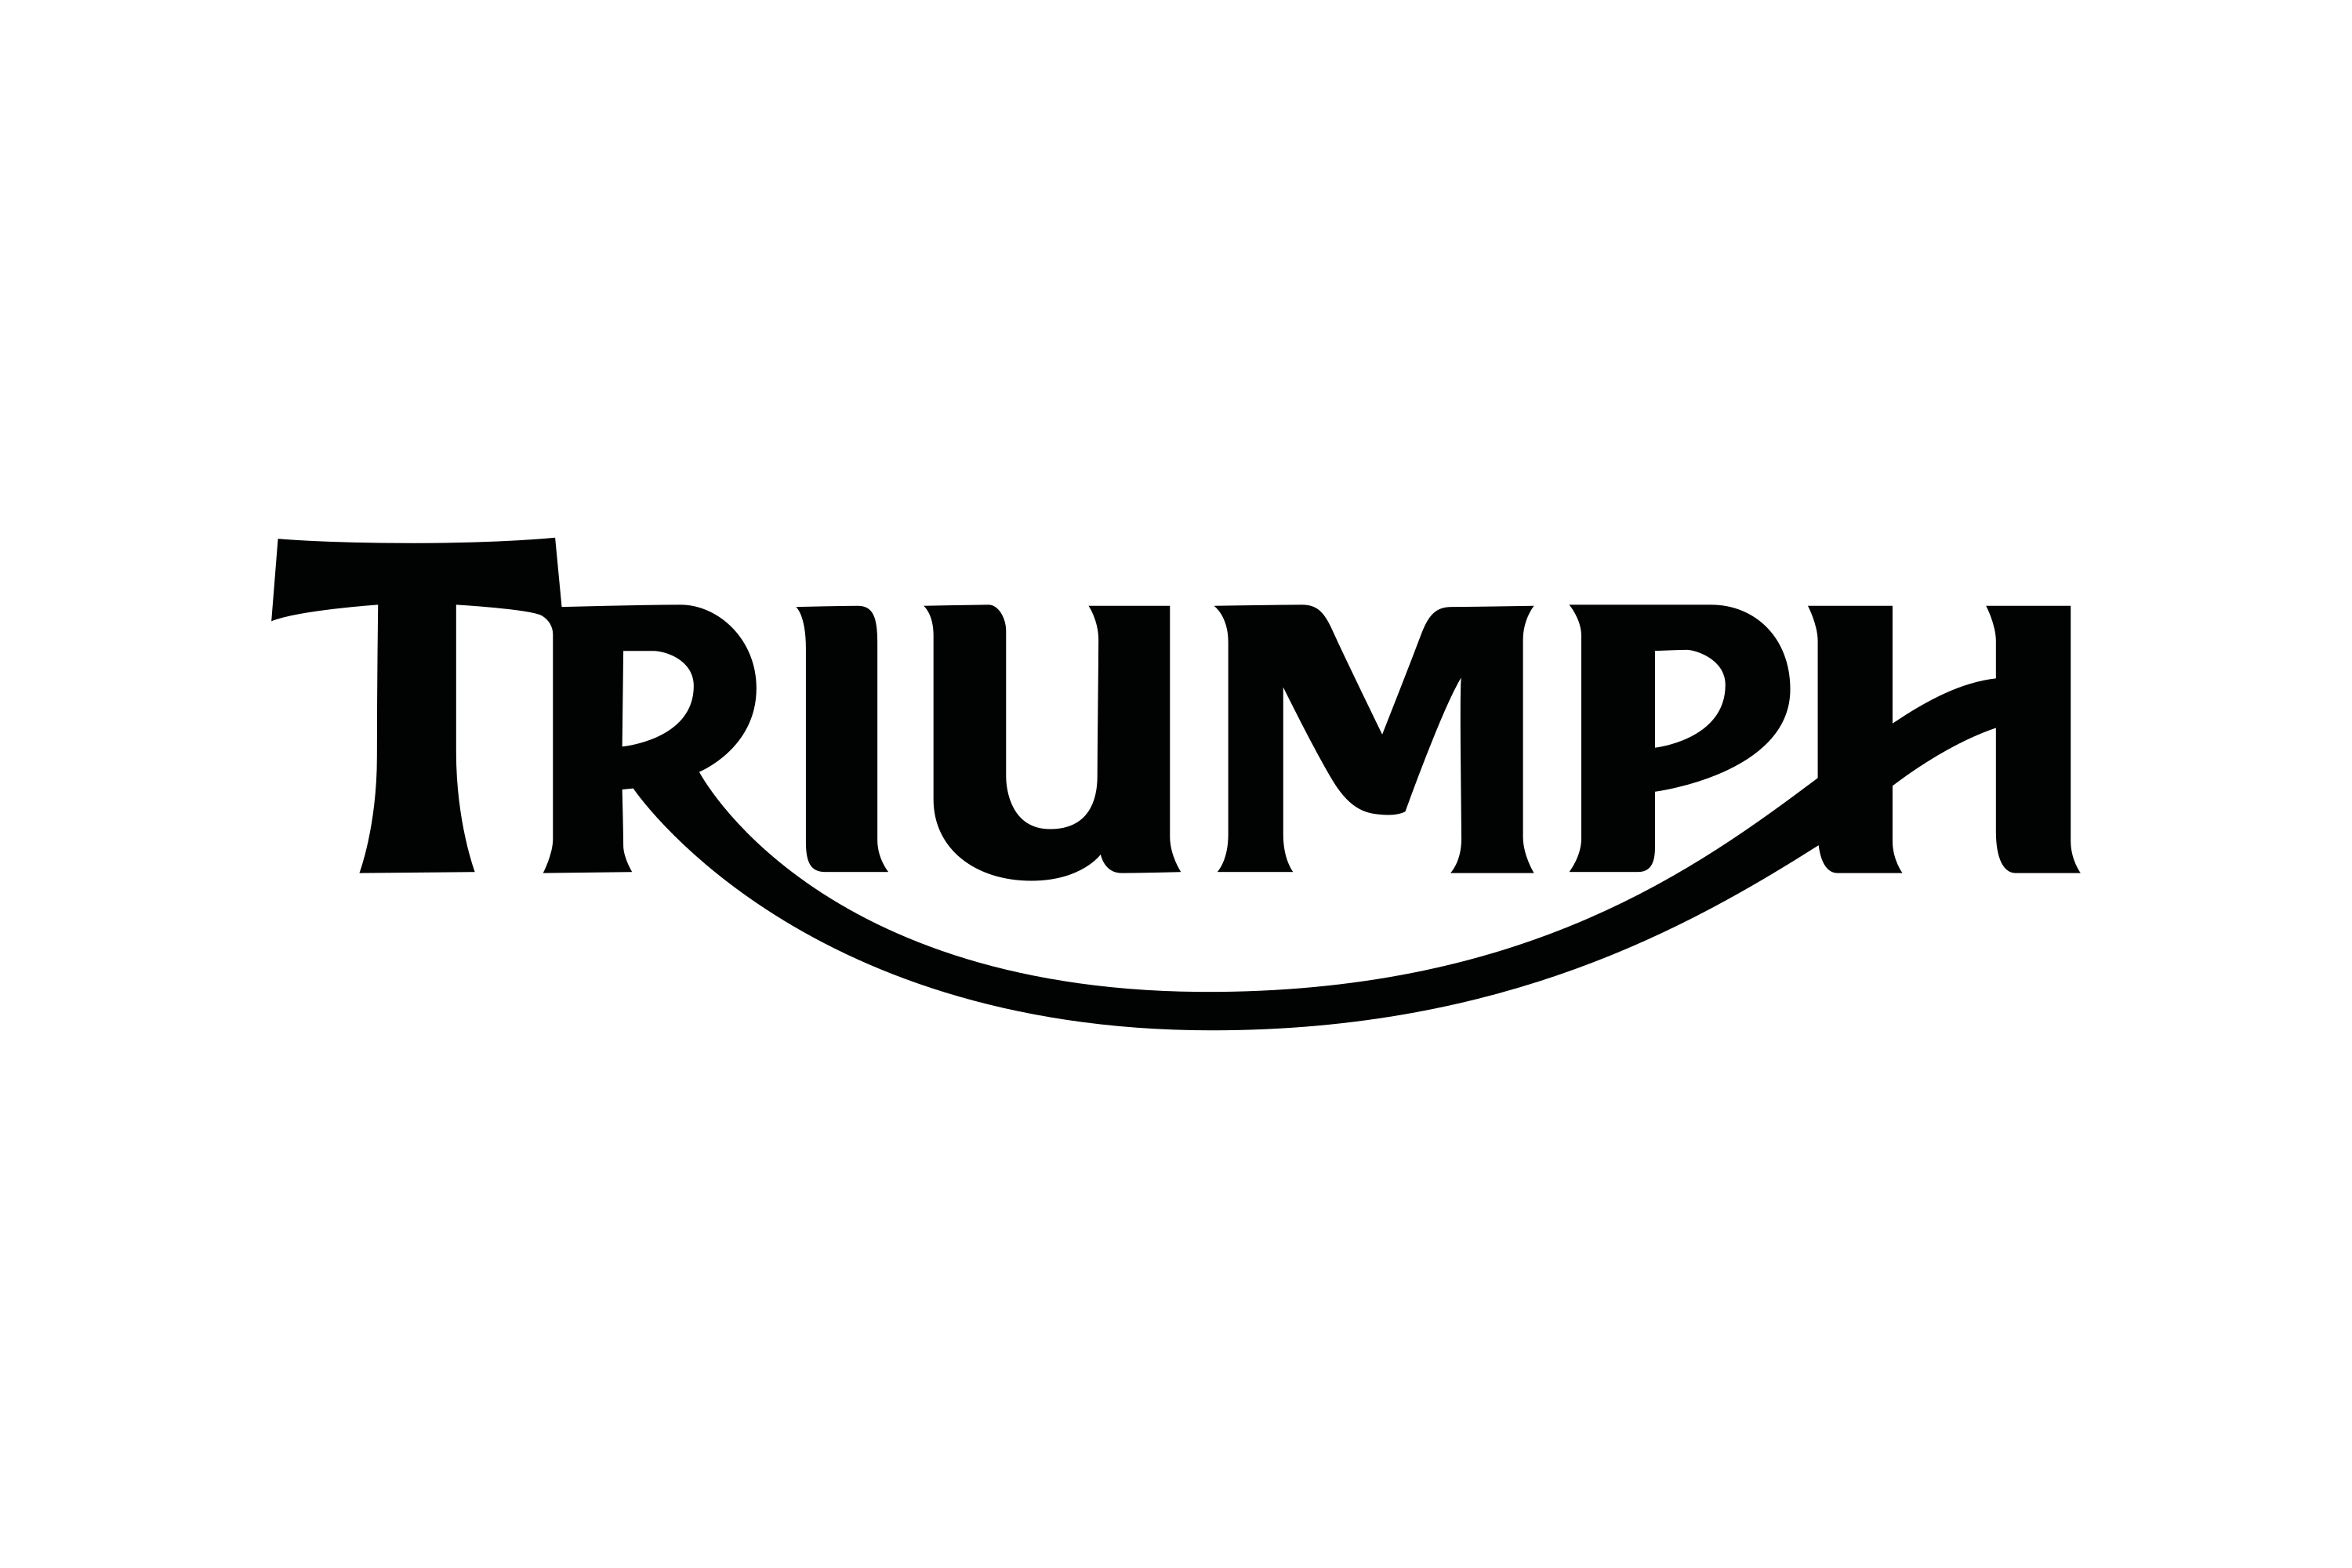 Triumph Motorcycles Ltd Logo